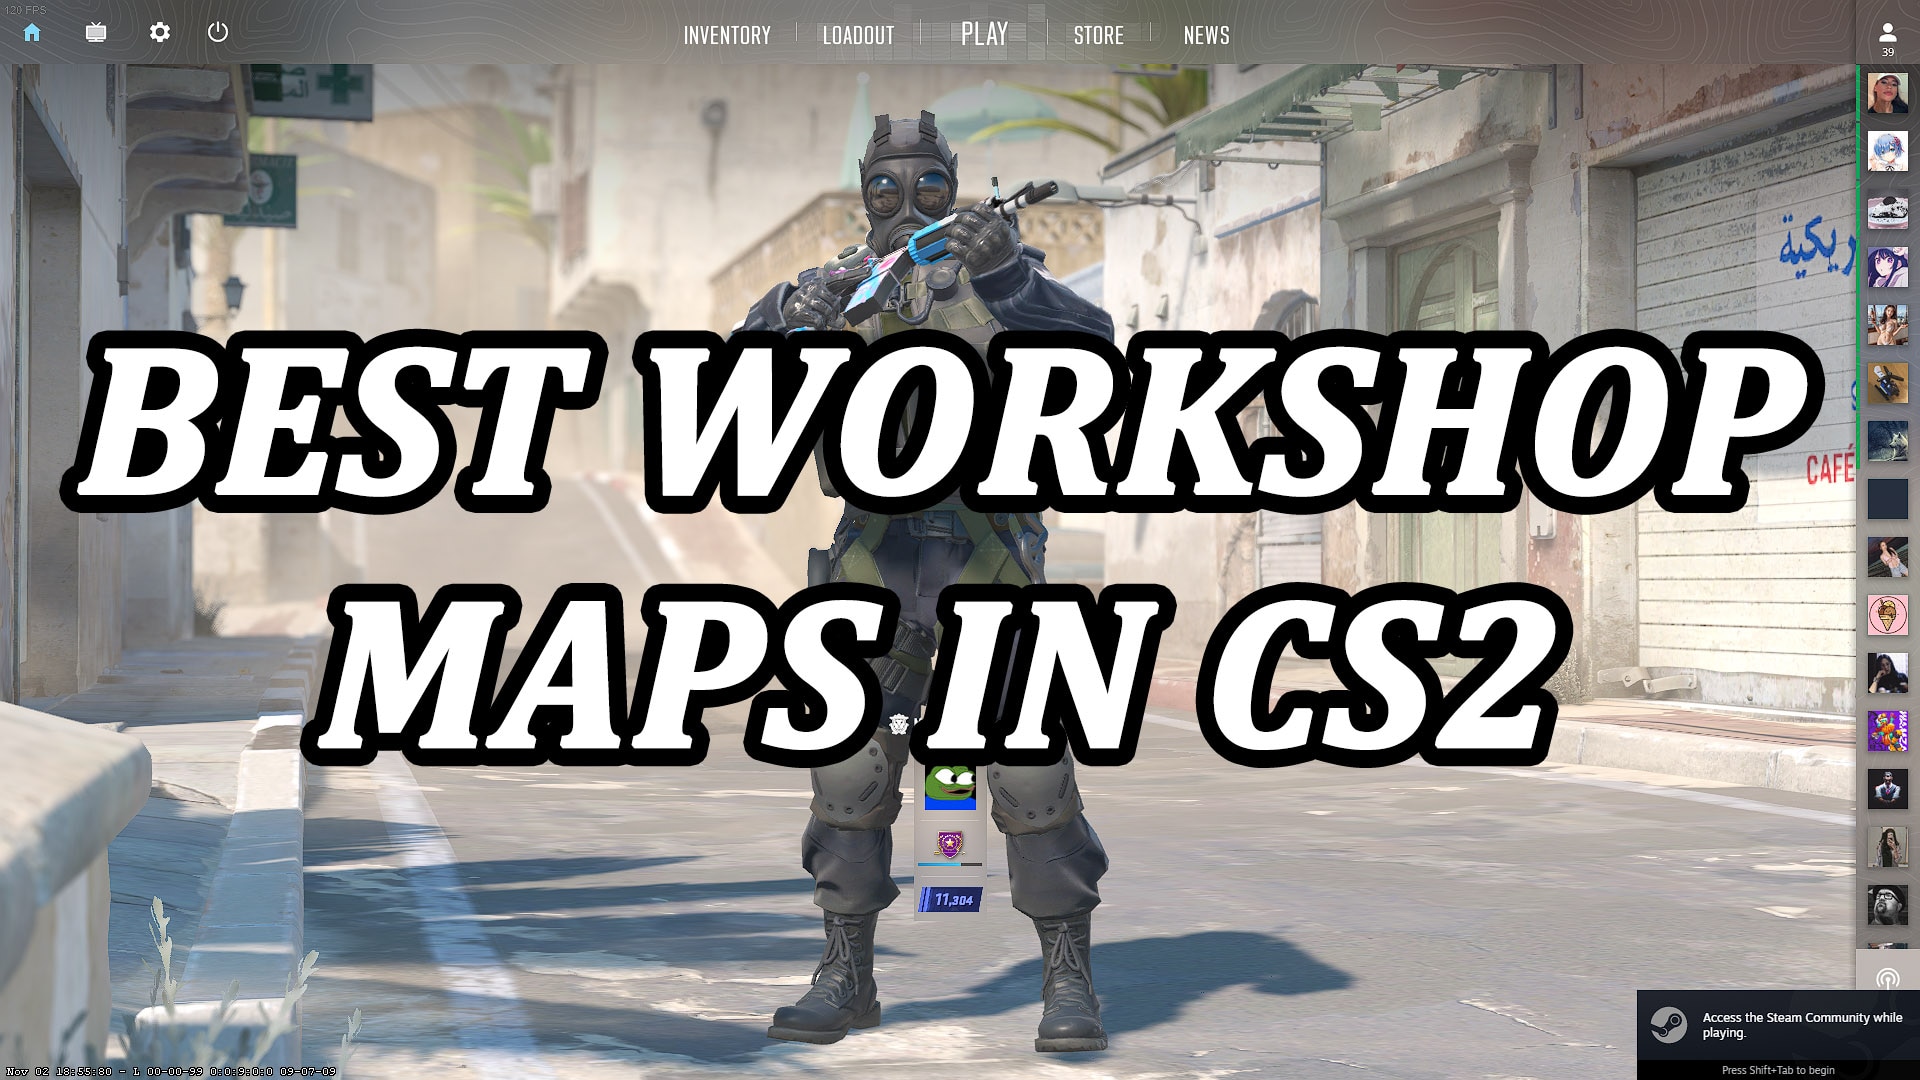 Best CS2 Workshop Maps - CS LAB